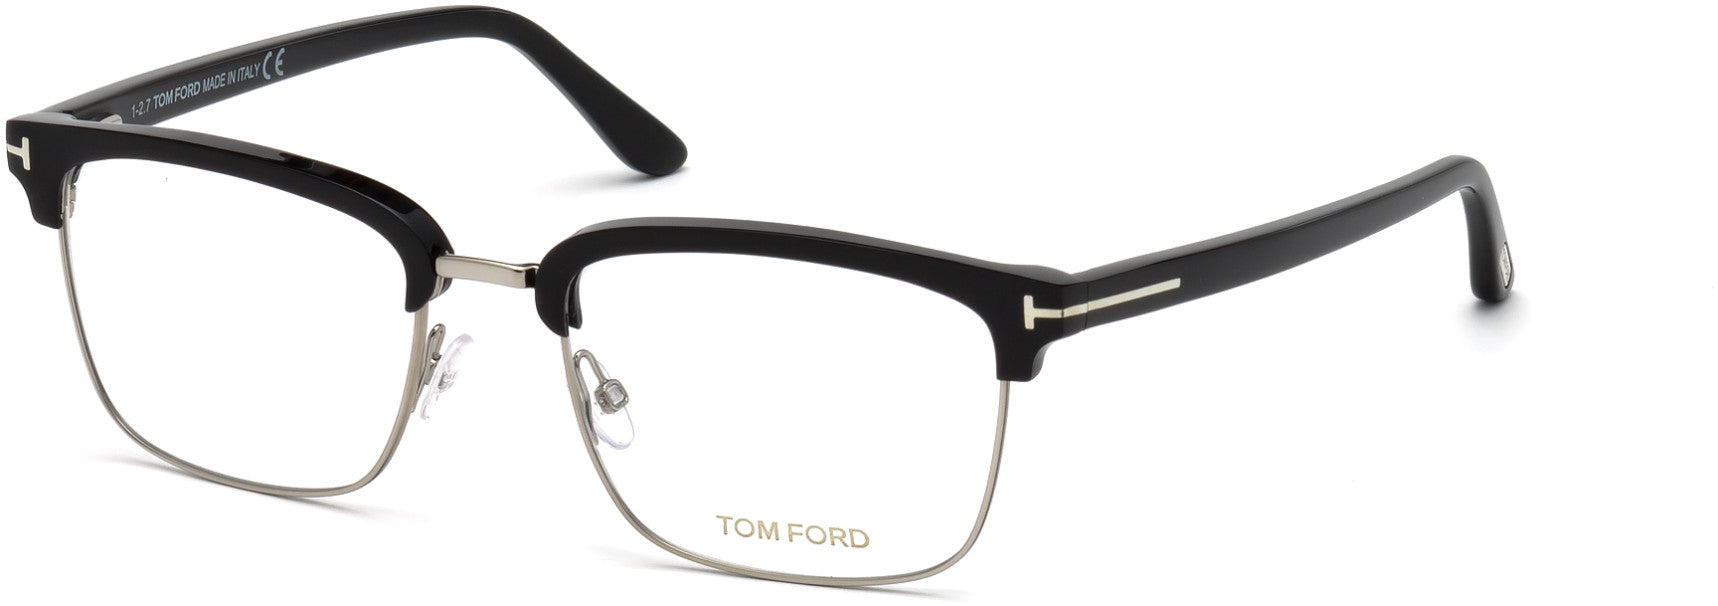 Tom Ford FT5504 Geometric Eyeglasses 005-005 - Shiny Black Acetate Front & Temples, Shiny Palladium Metal